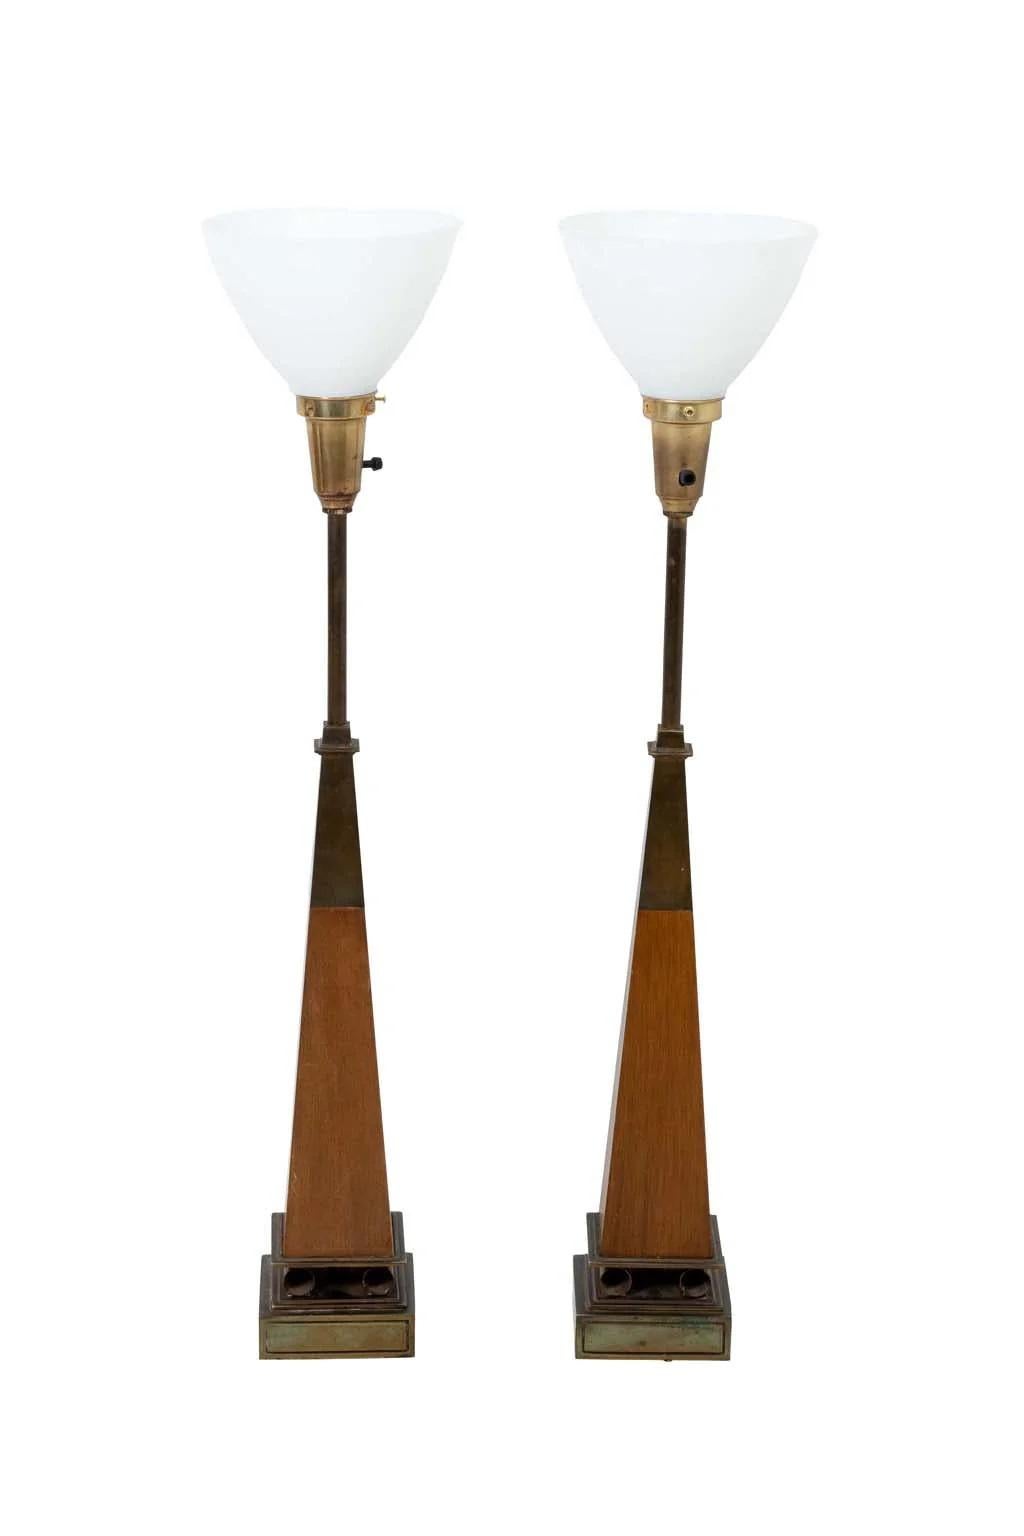 Metal Pair Of Stiffel Tommi Parzinger Style Obelisk Lamps For Sale